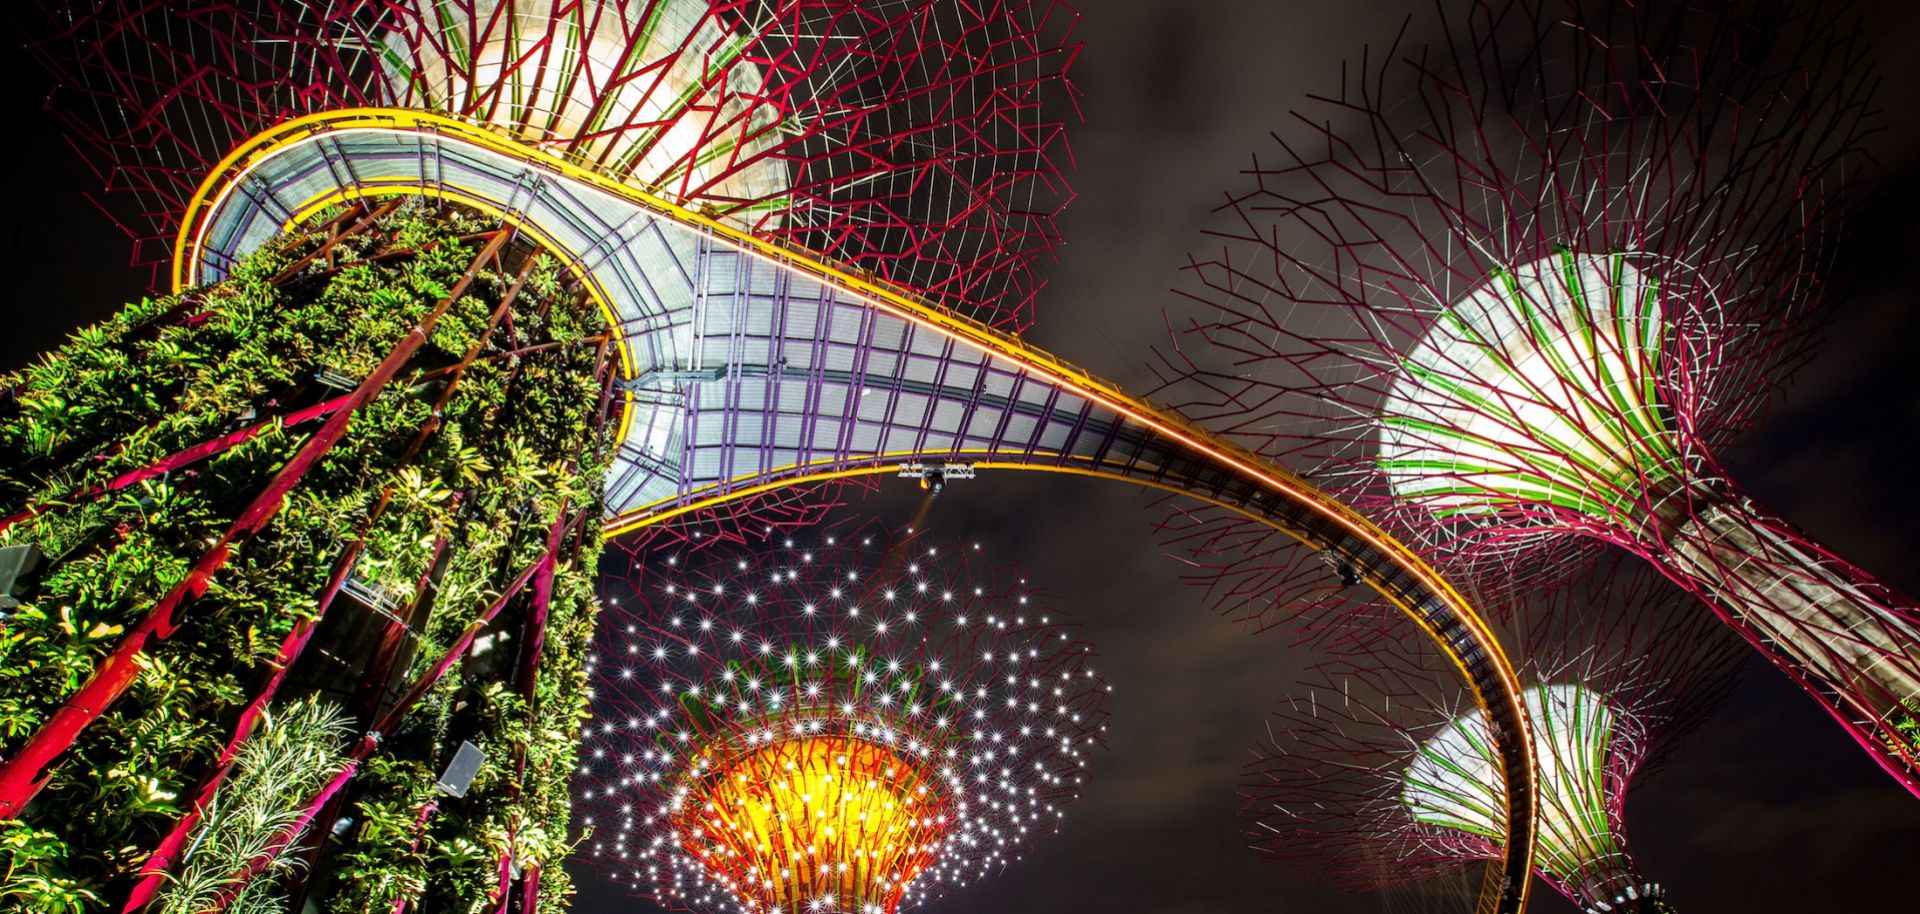 The illuminated Supertree Grove in Singapore